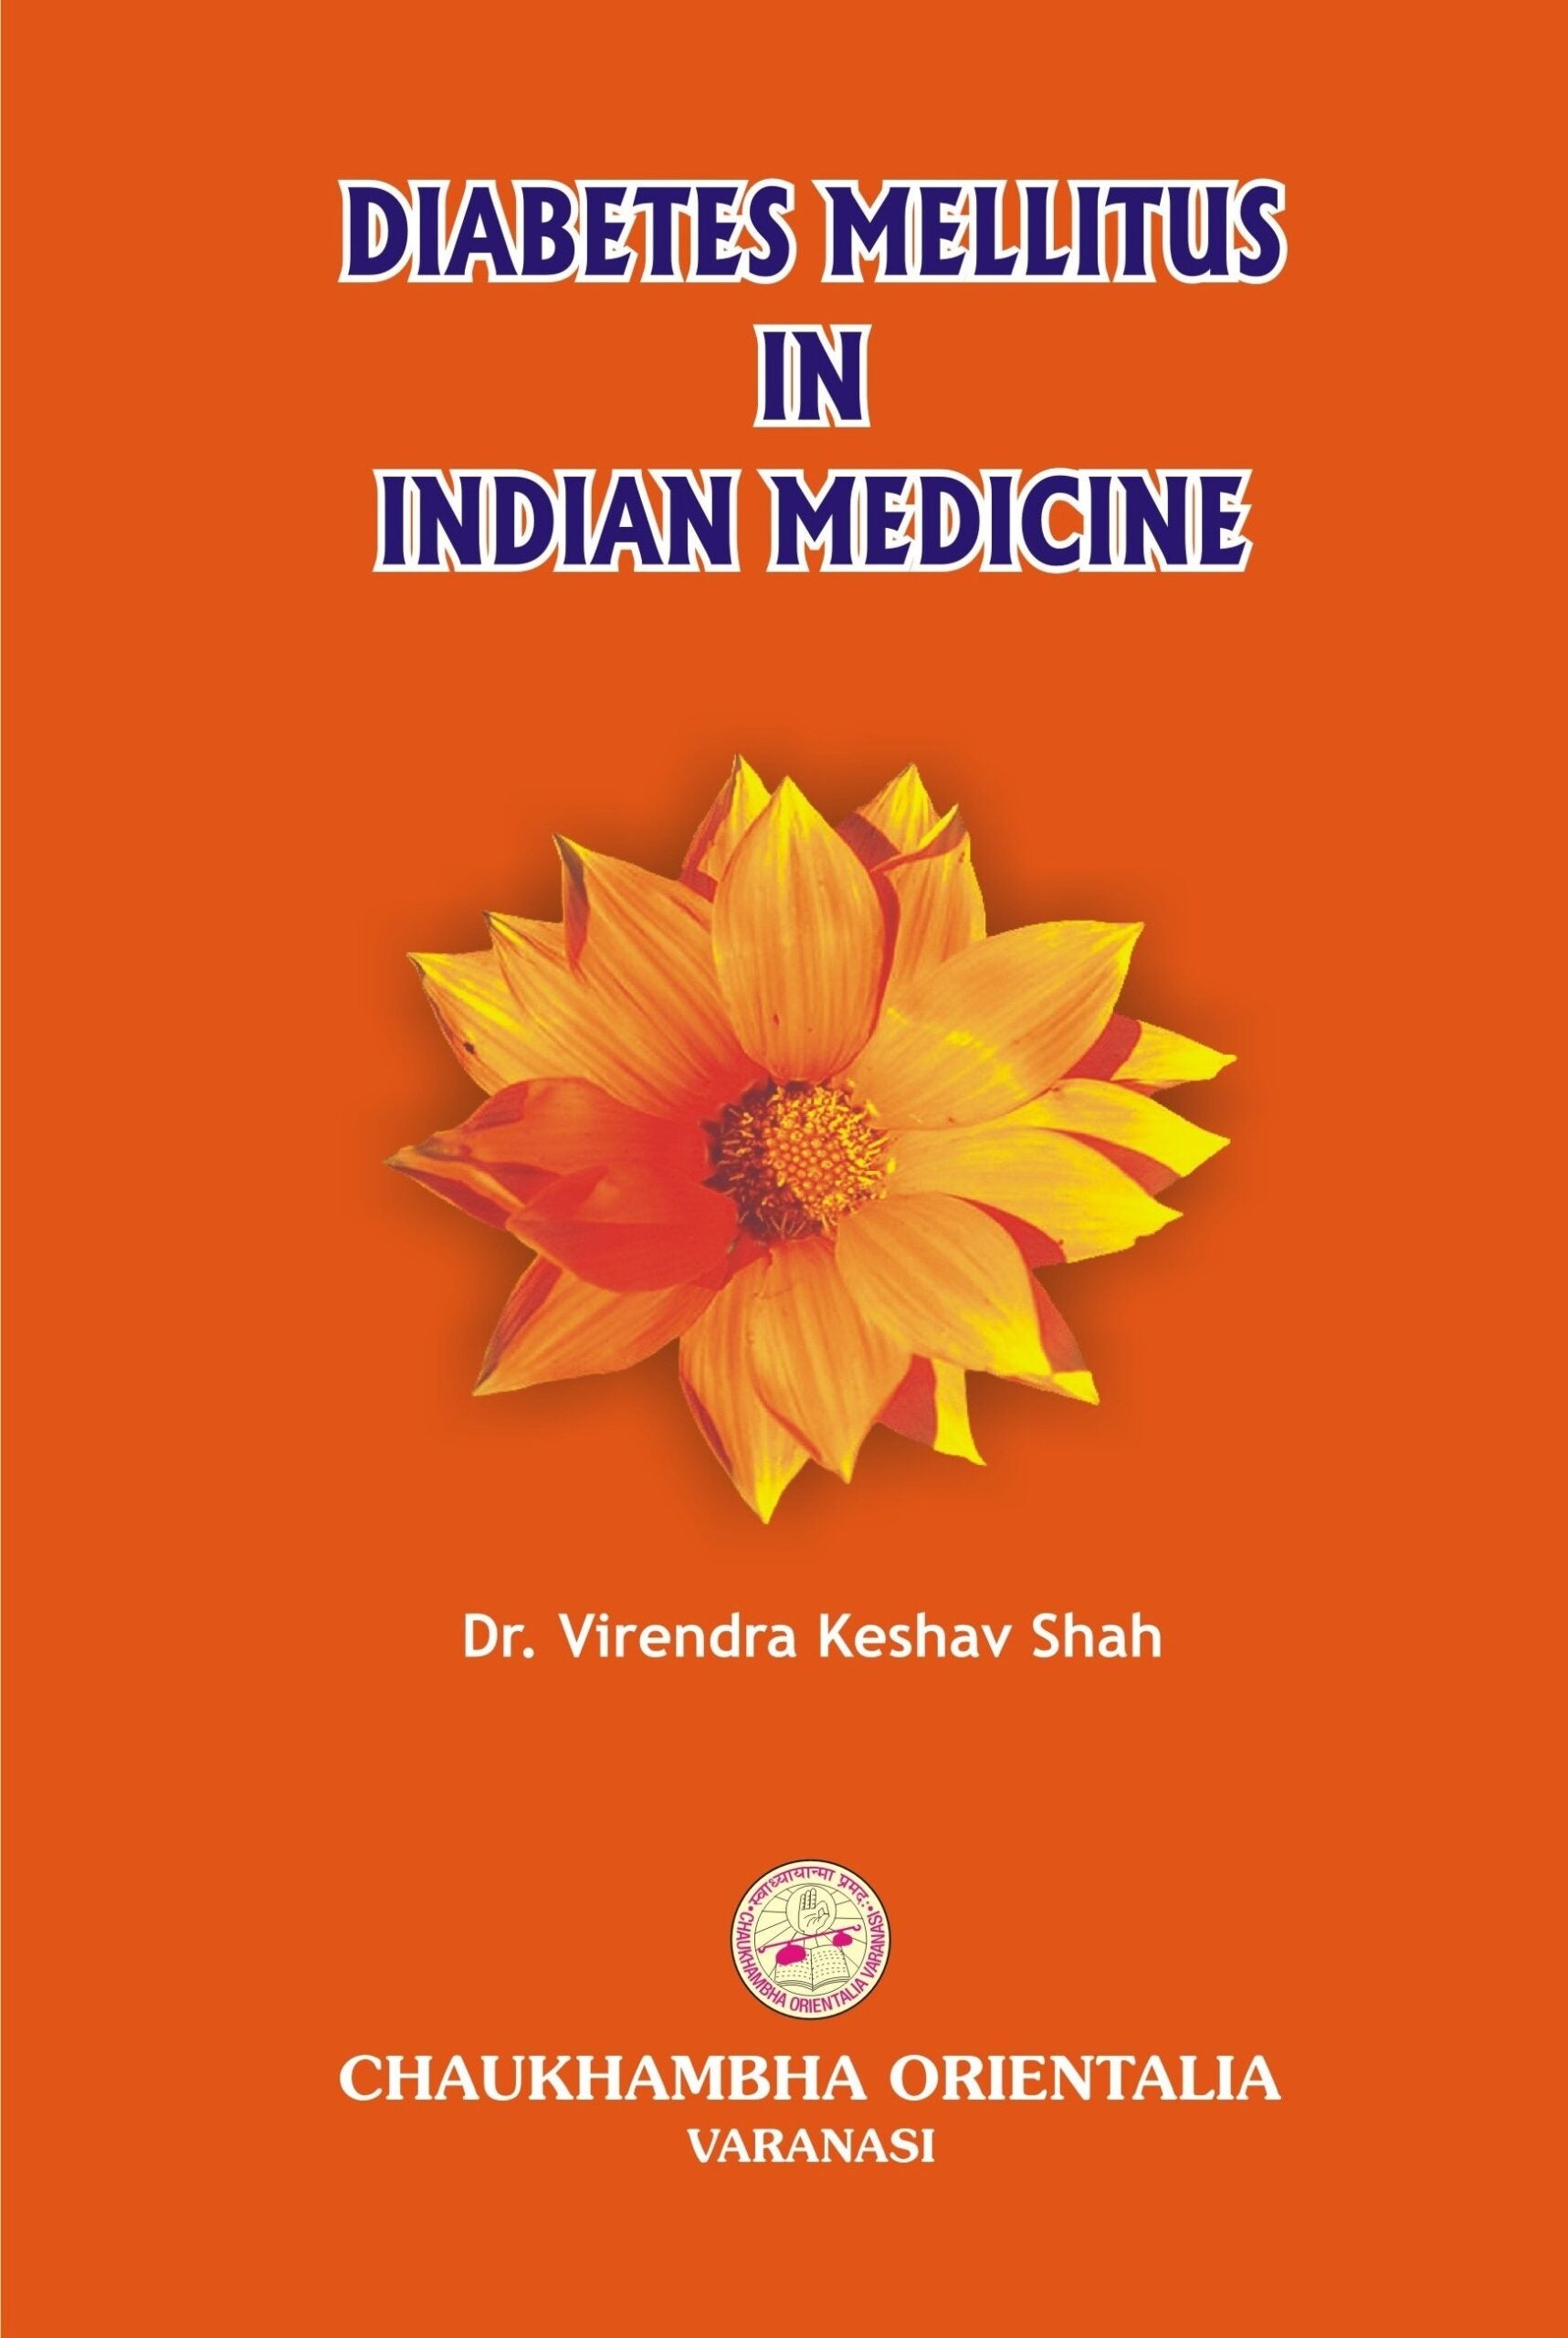 Chaukhambha Orientalia Diabetes Mellitus In Indian Medicine (Hindi)